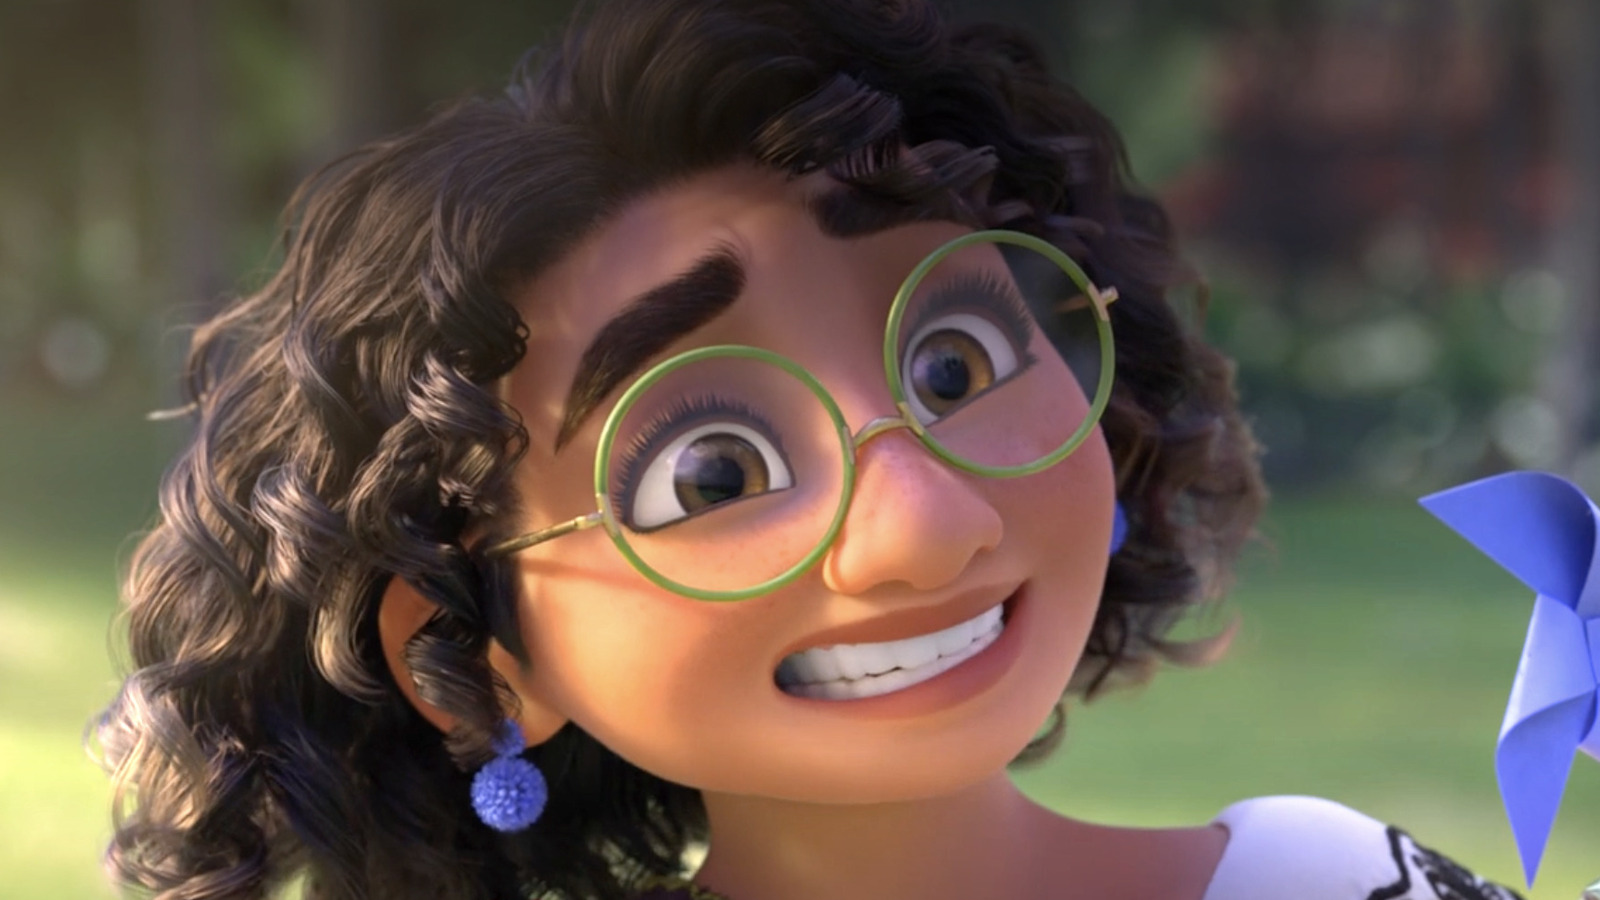 Encanto” Mirabel Profile Avatar Added To Disney+ – What's On Disney Plus